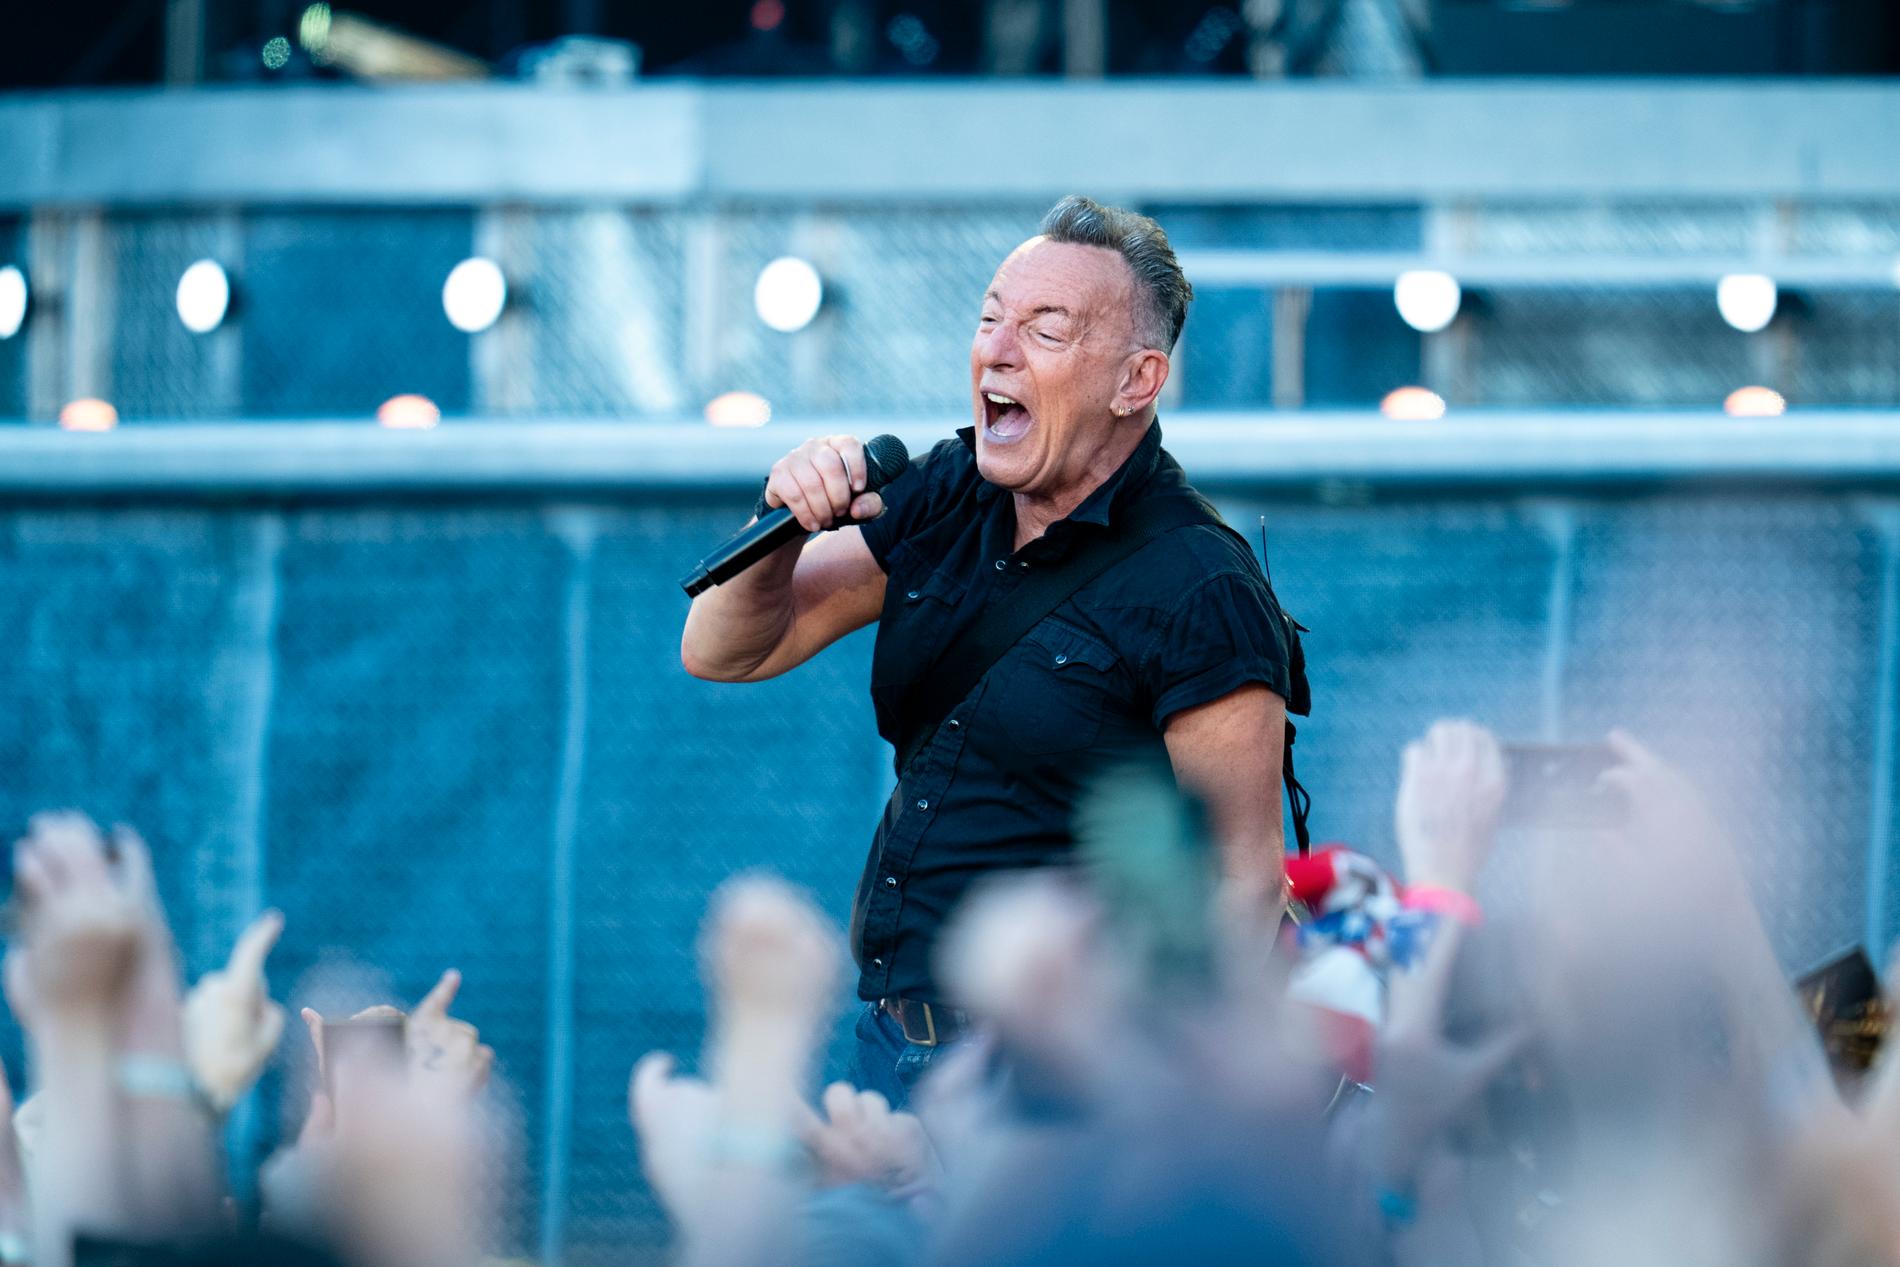 Bruce Springsteen.